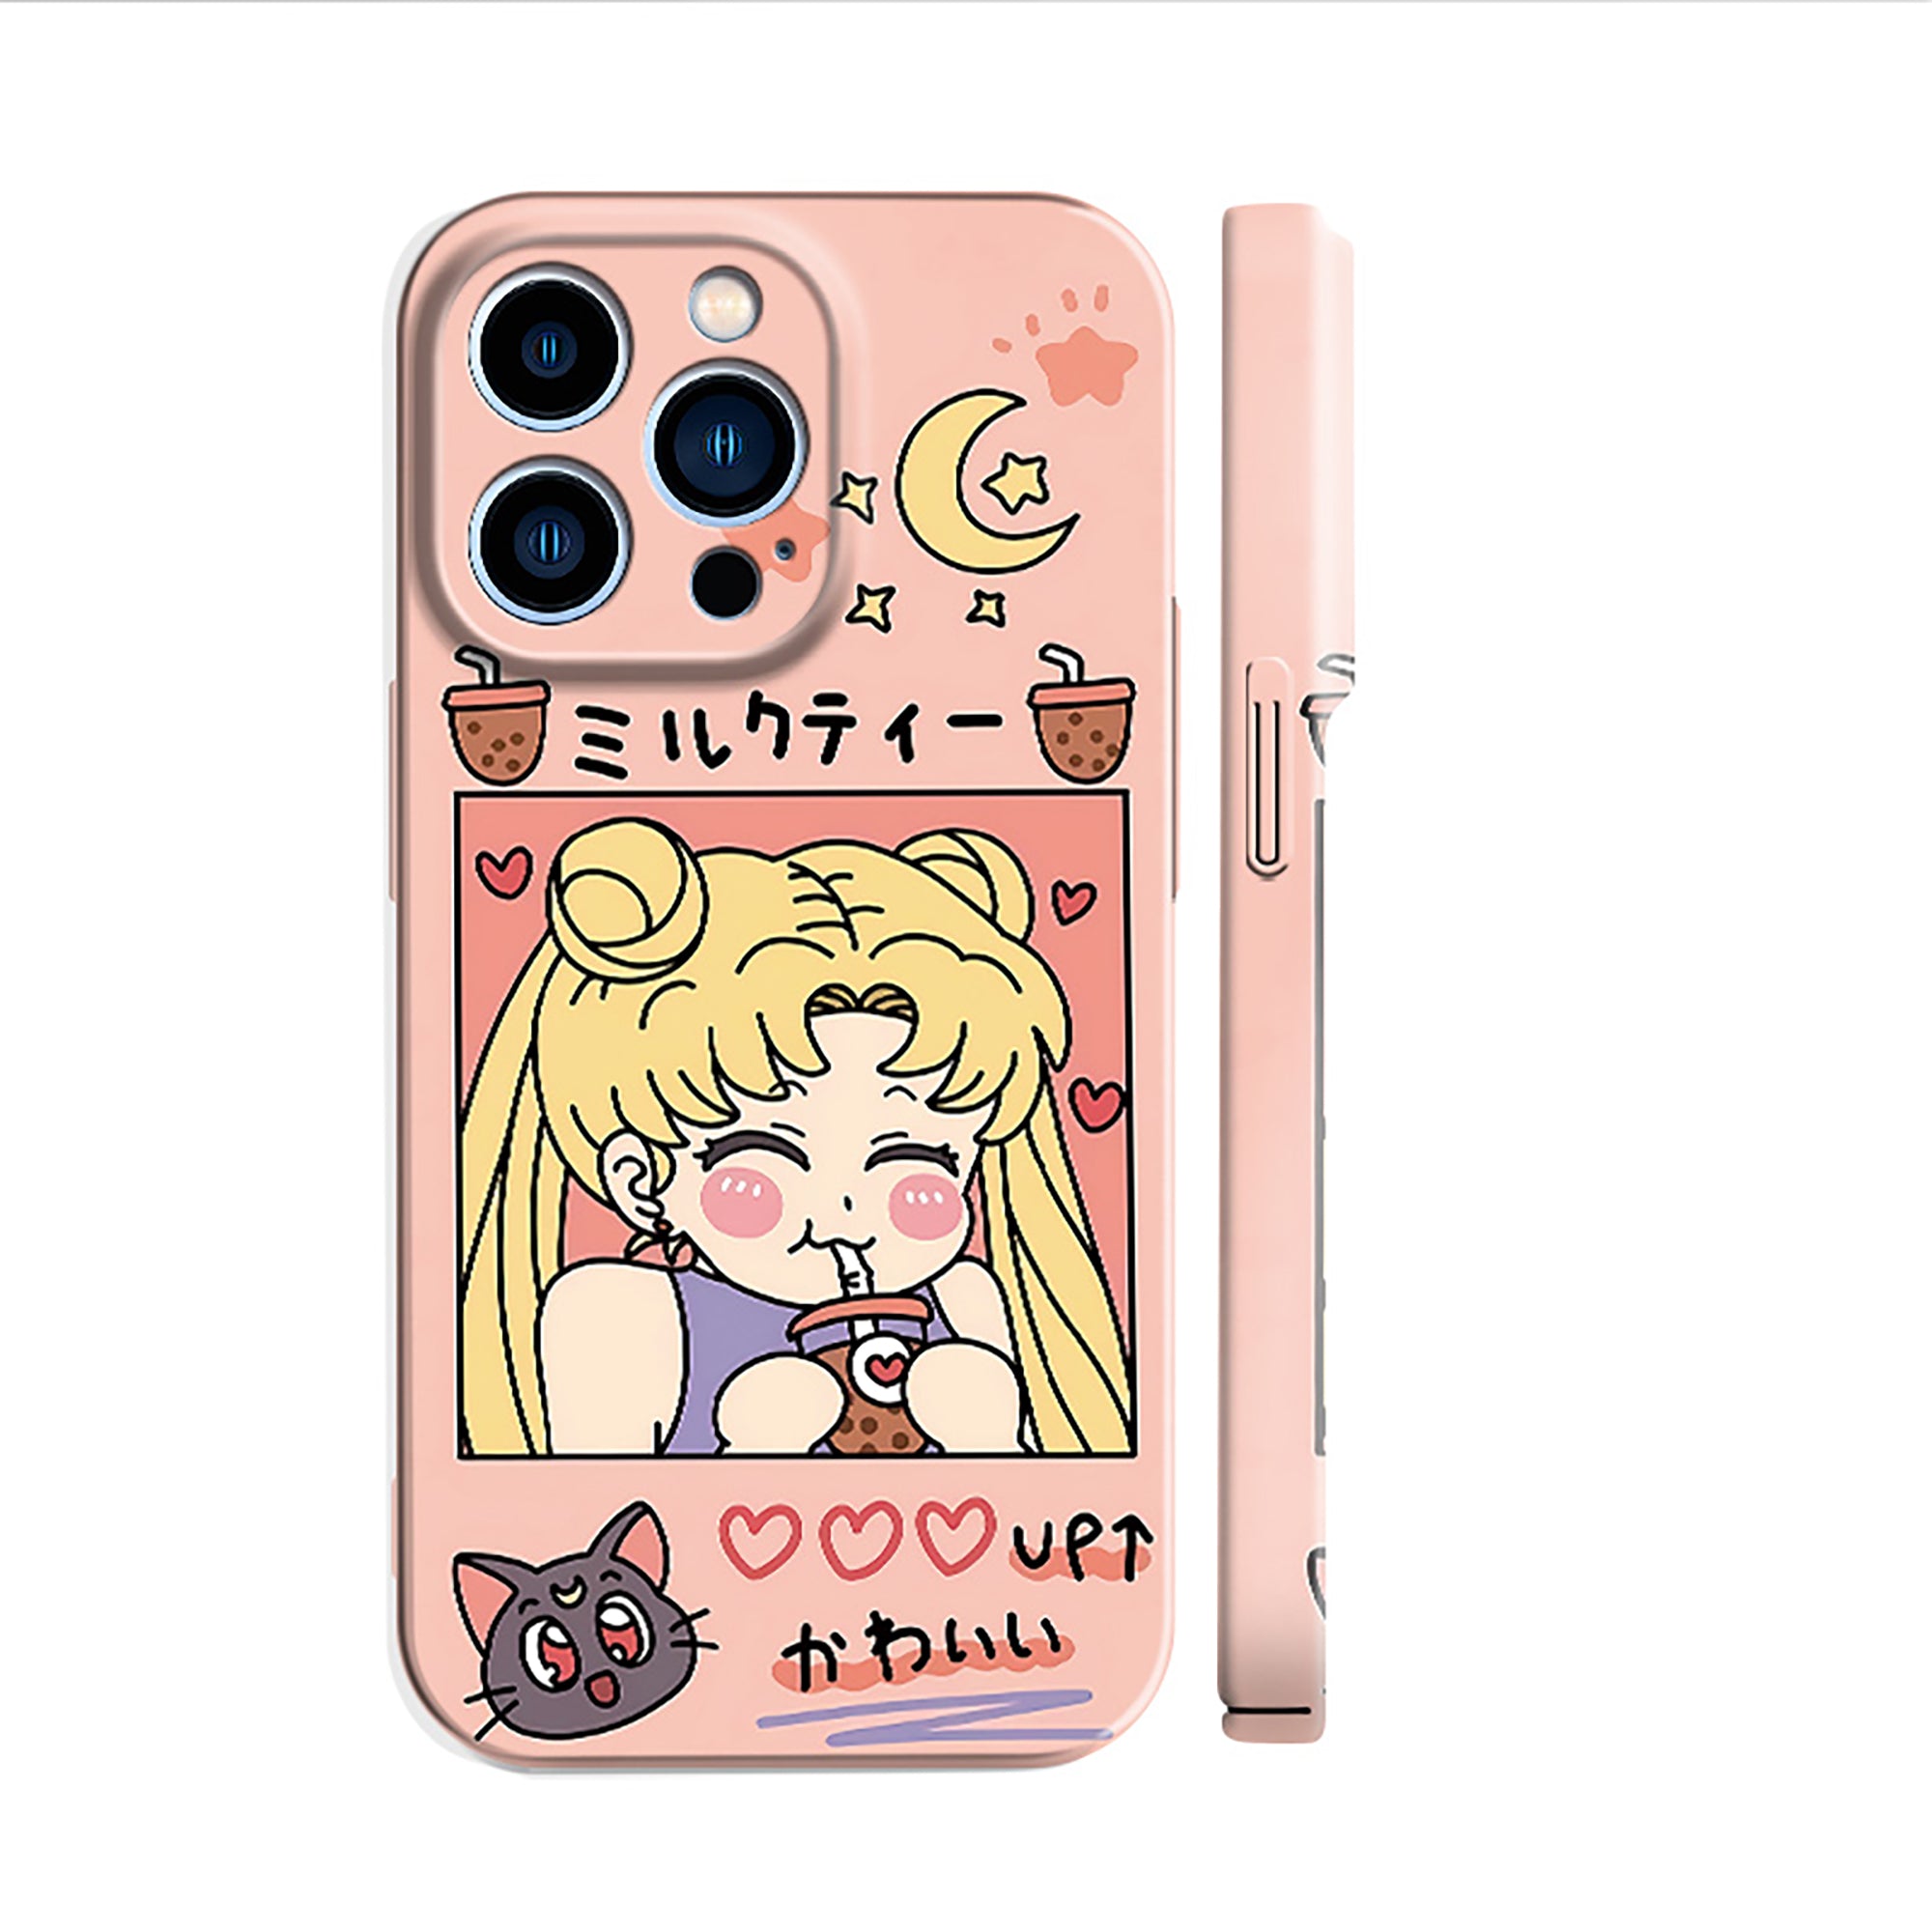  Sailor Moon phone